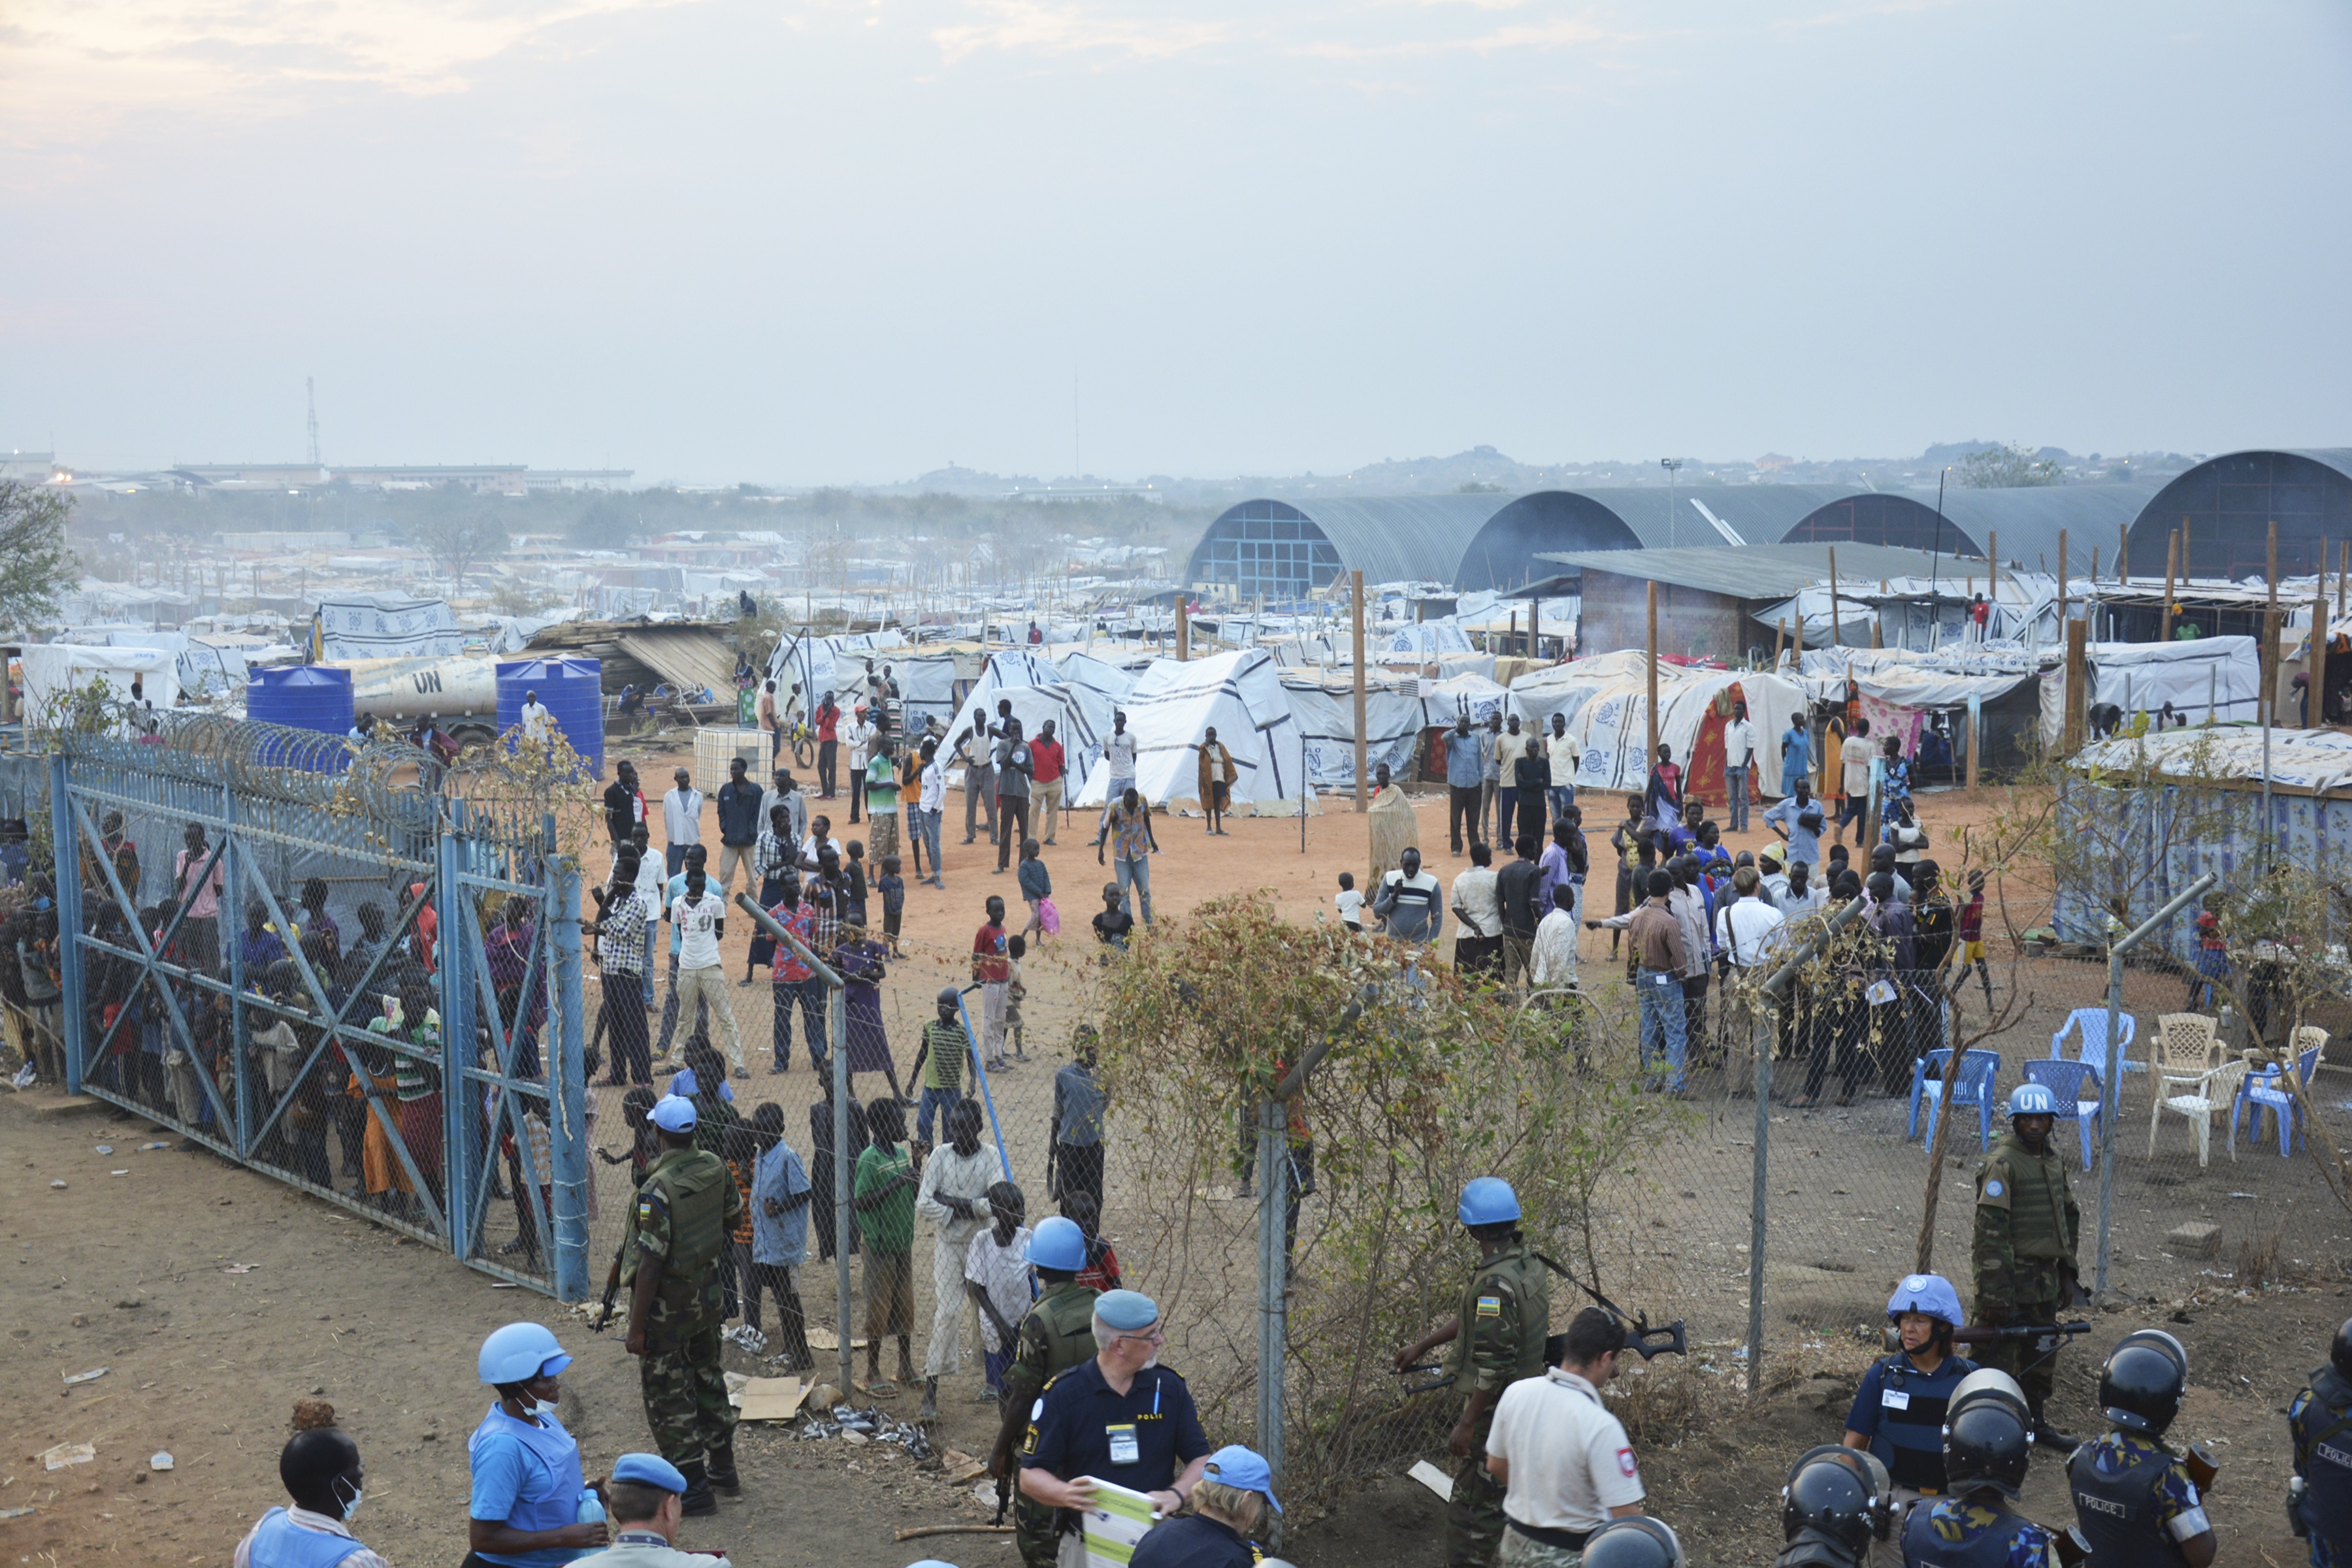 UN House IDP PoC camp in Juba